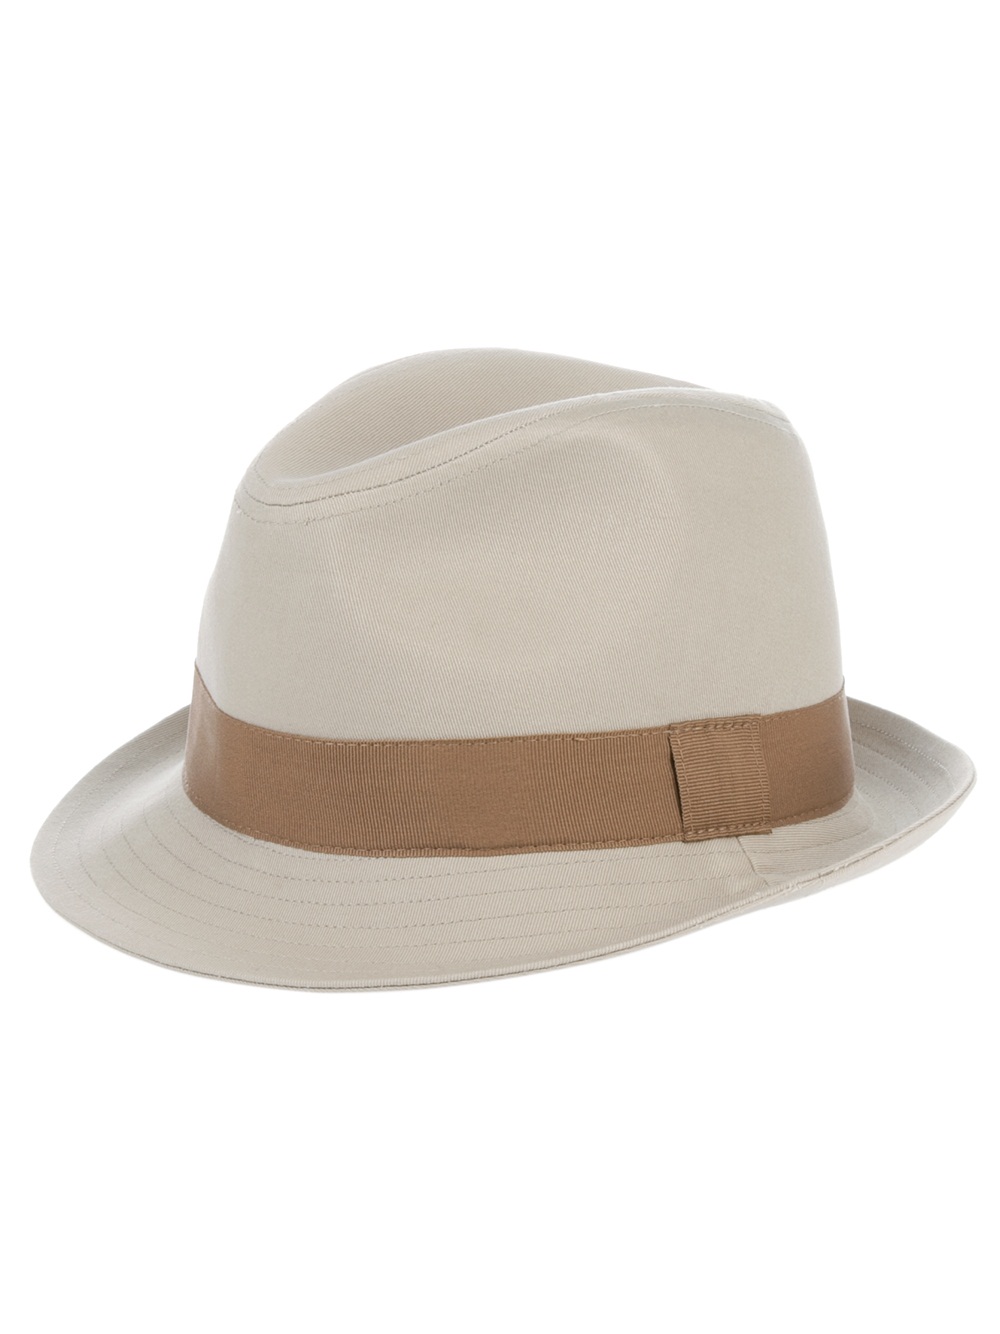 Ralph lauren Panama Hat in Natural for Men | Lyst